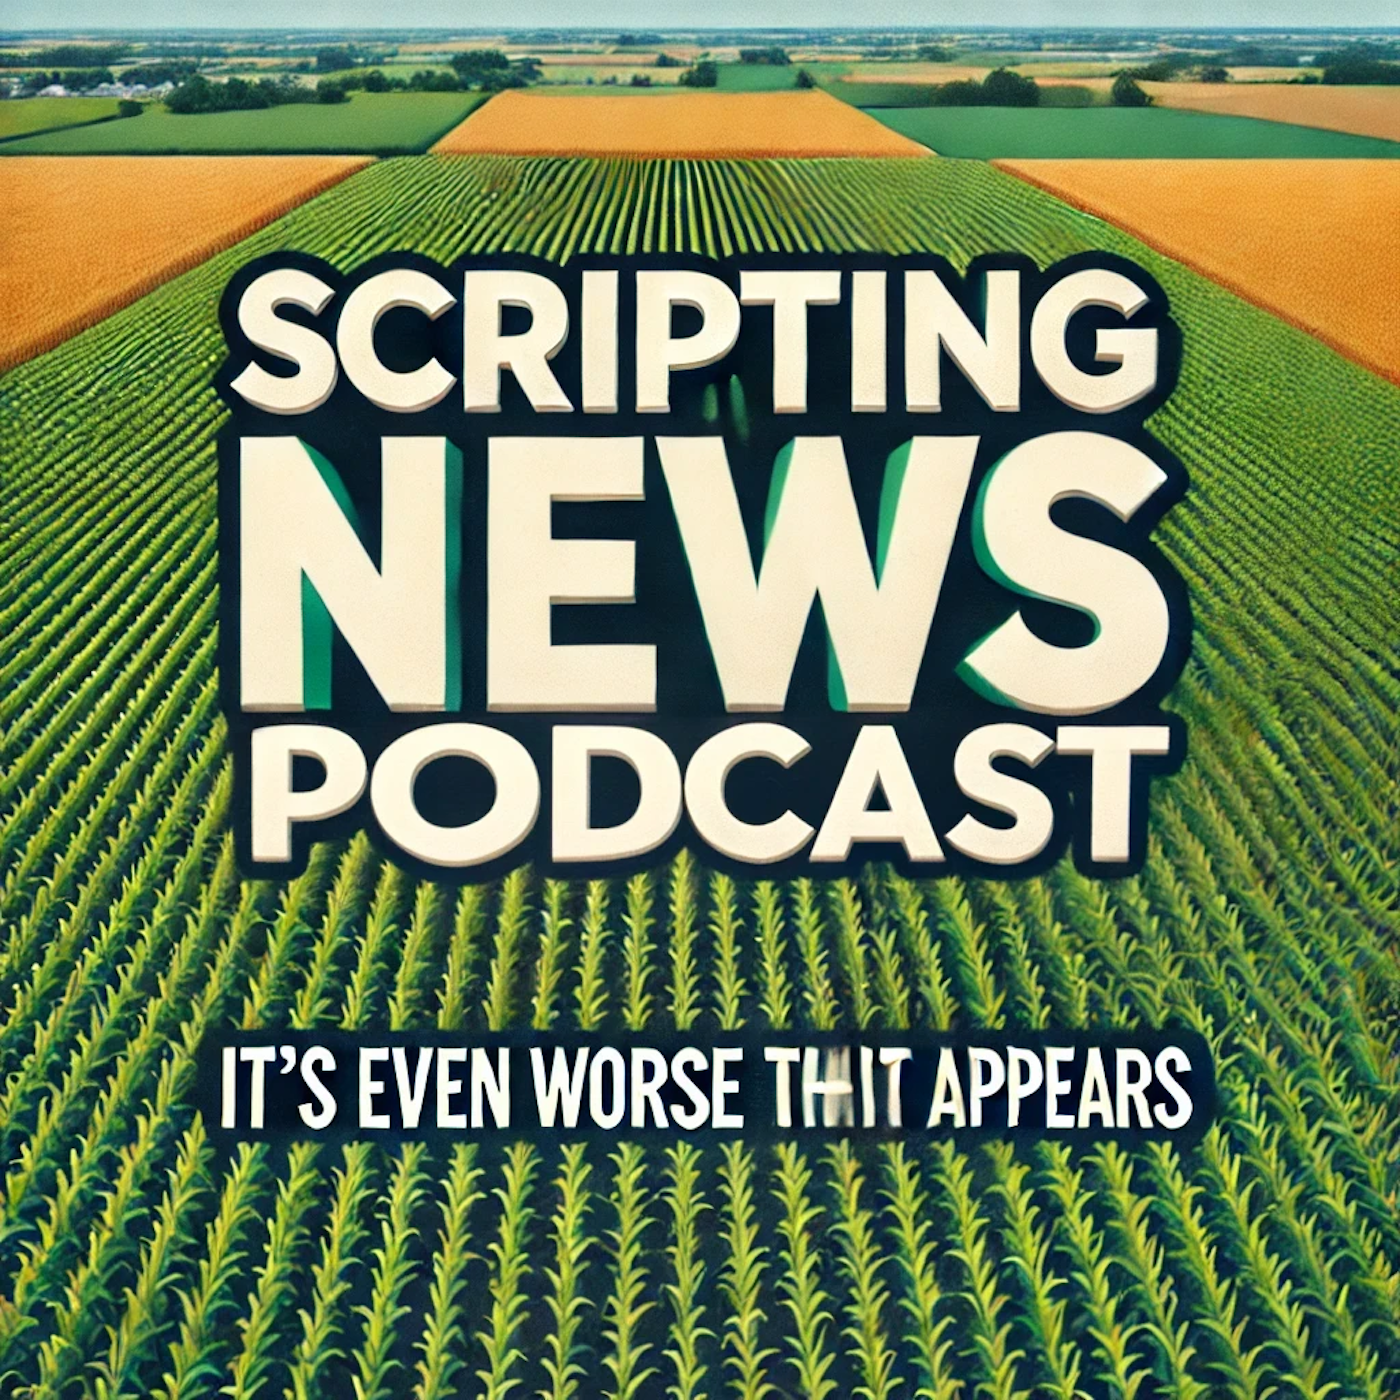 Scripting News podcast